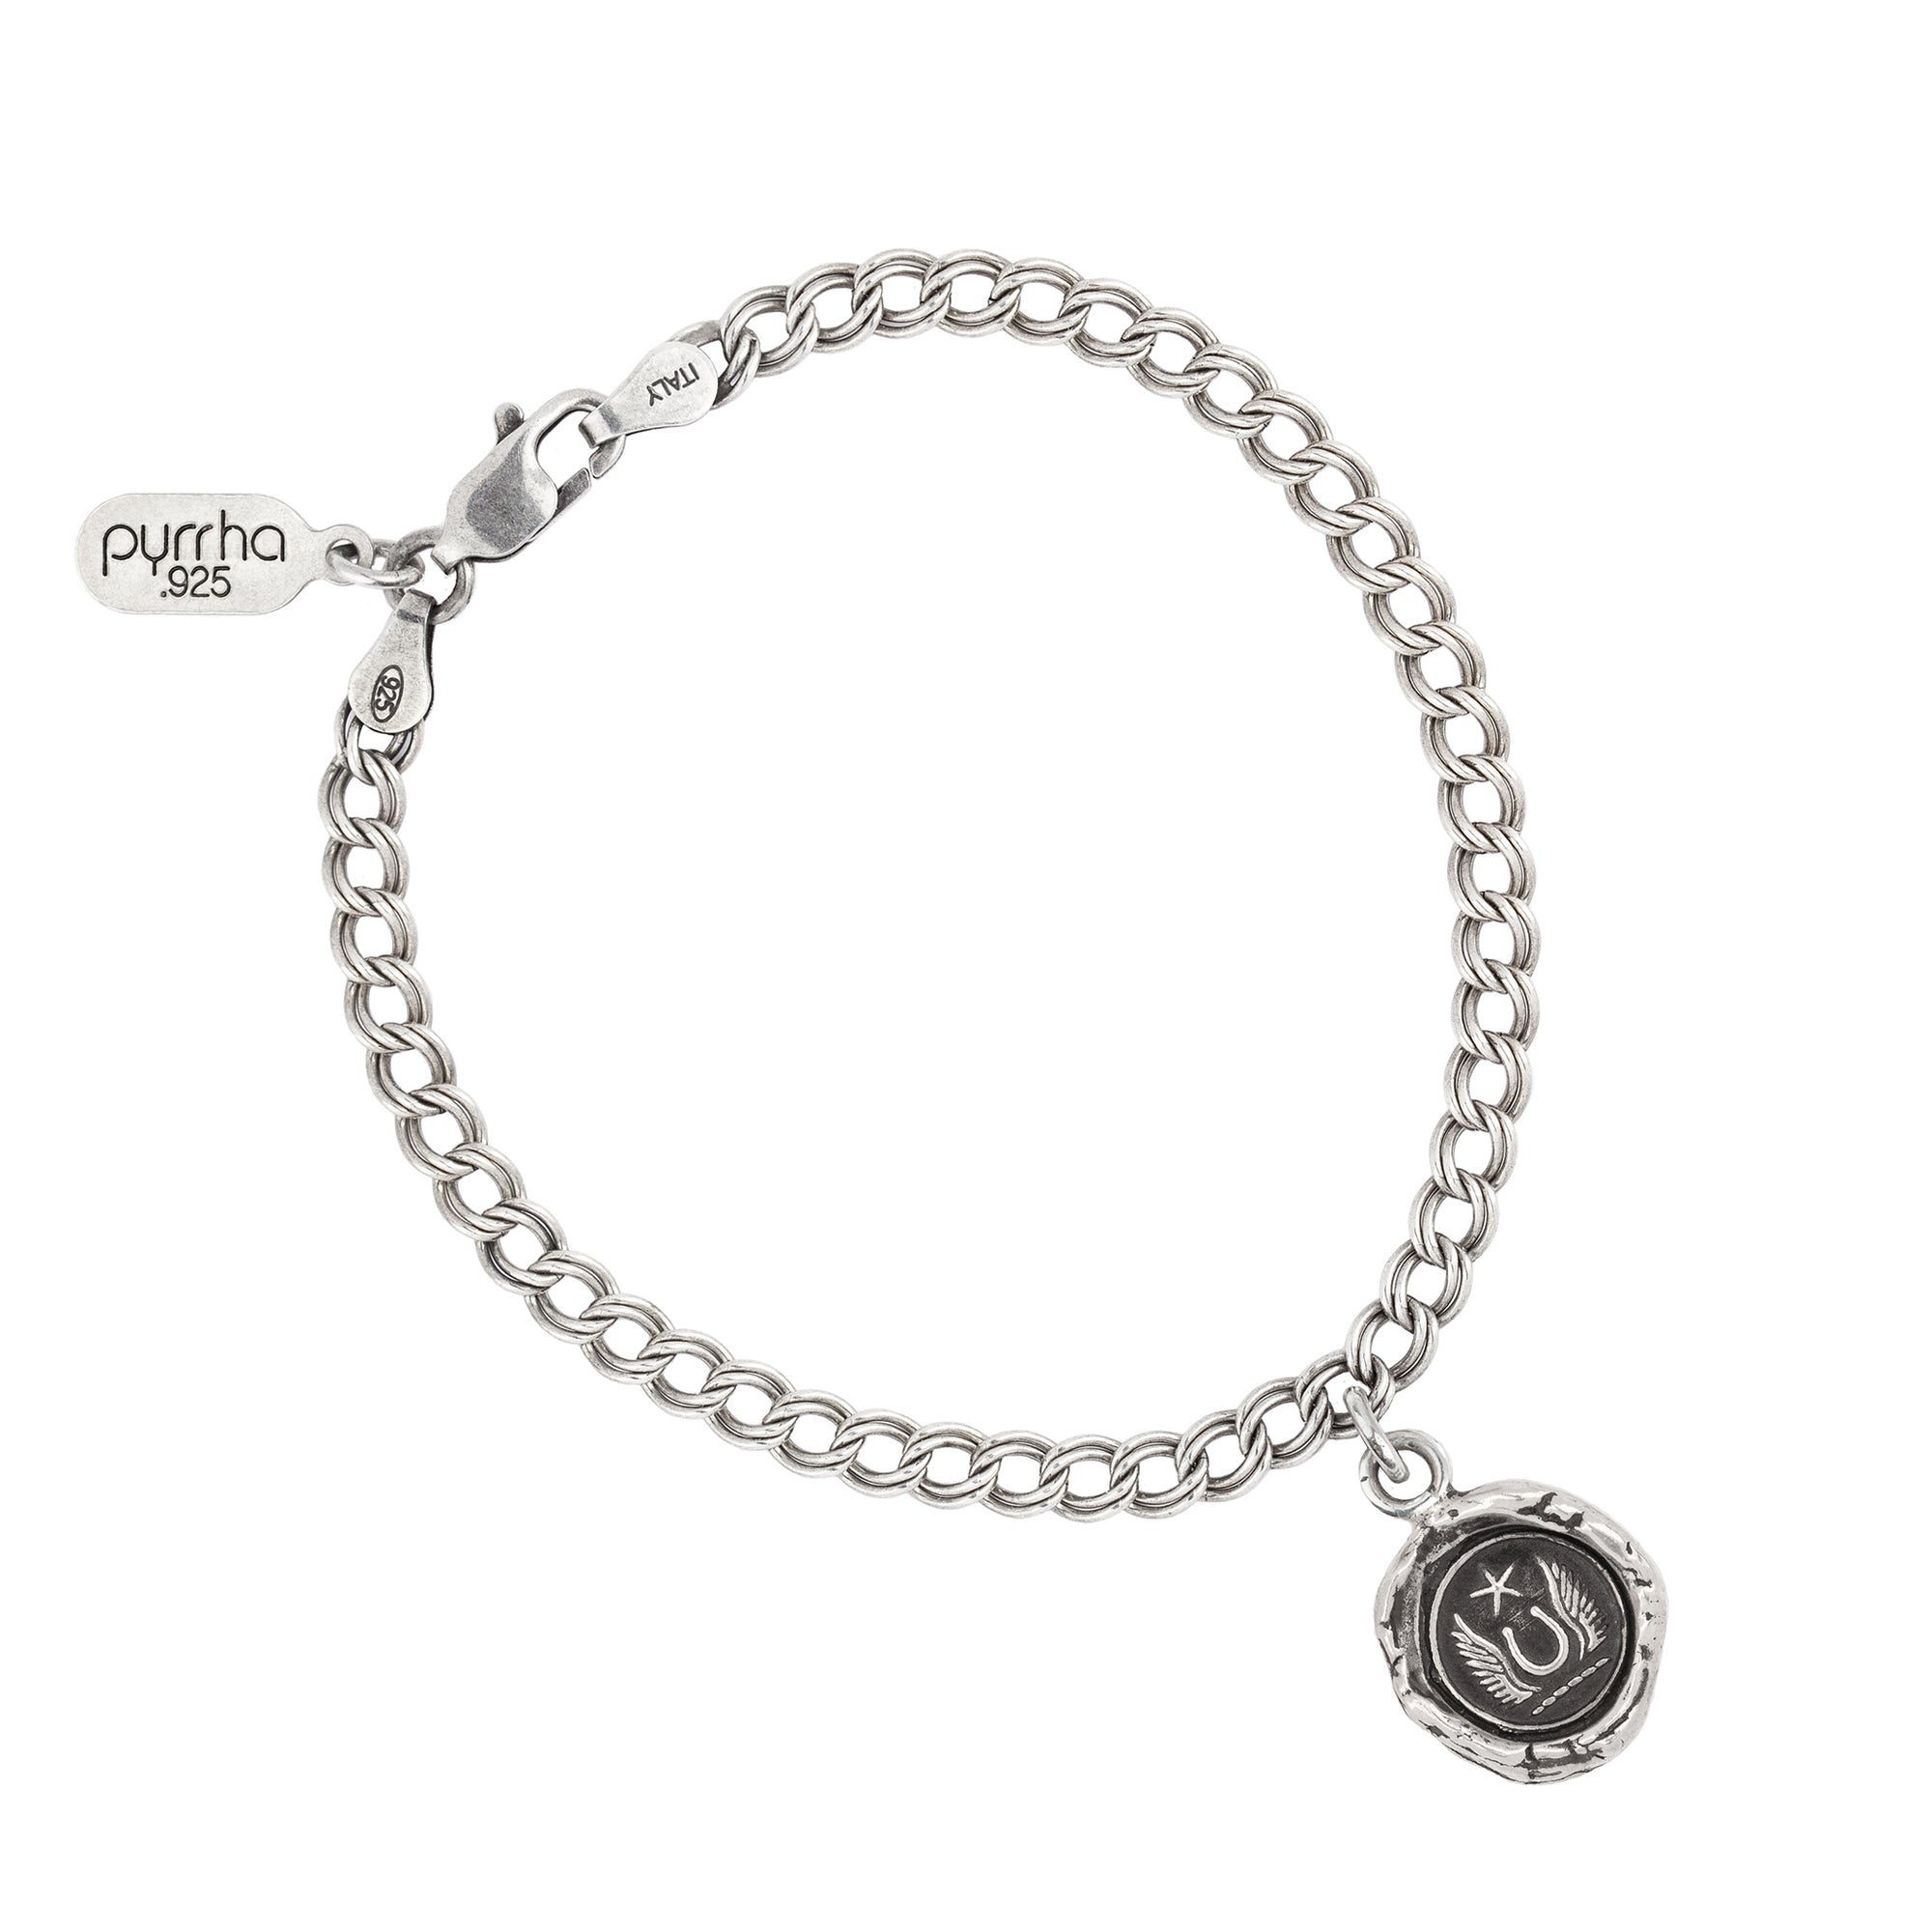 Pyrrha luck and protection talisman chain bracelet